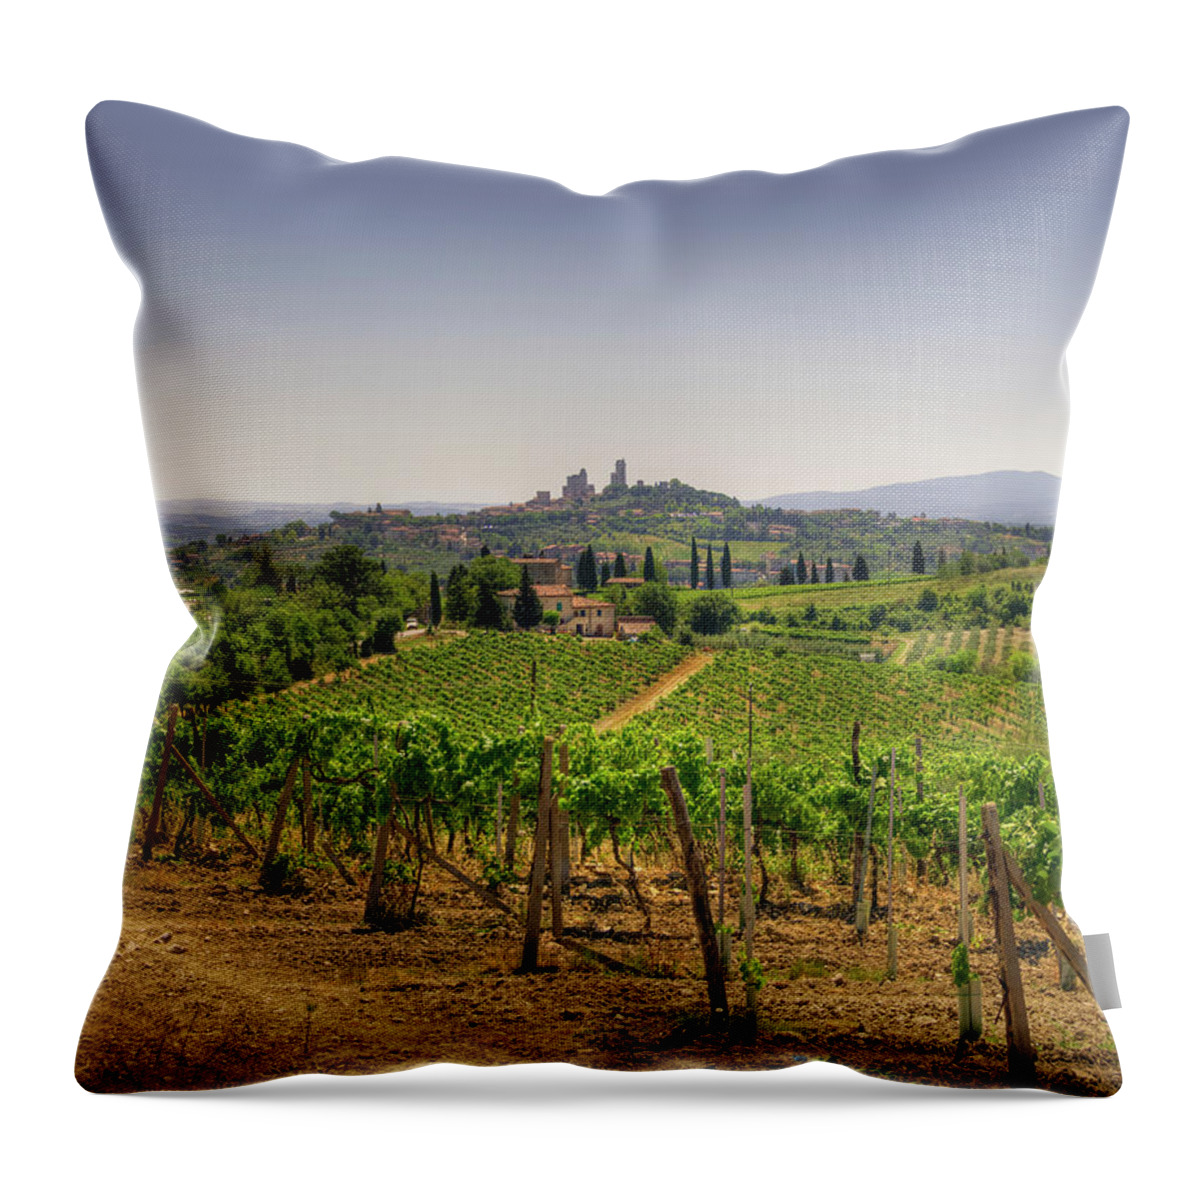 Clear Sky Throw Pillow featuring the photograph Skyline Of San Gimignano by Tjarko Evenboer / The Netherlands